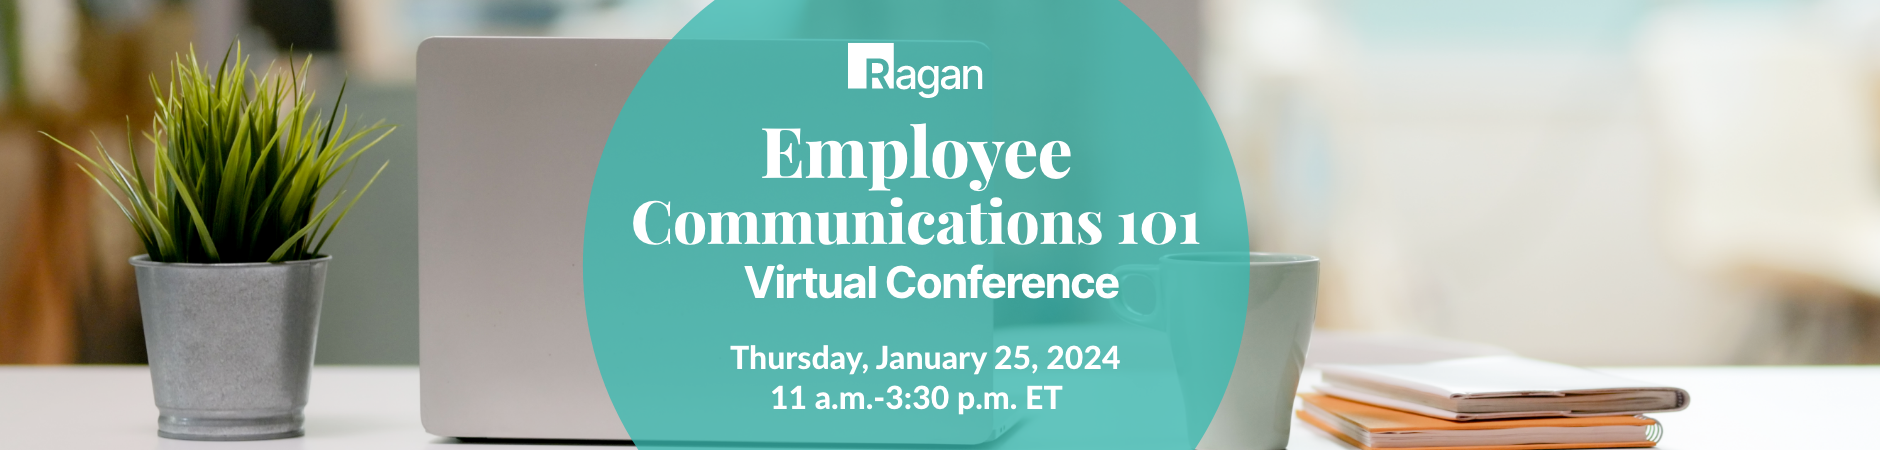 Employee Communications 101 Virtual Conference